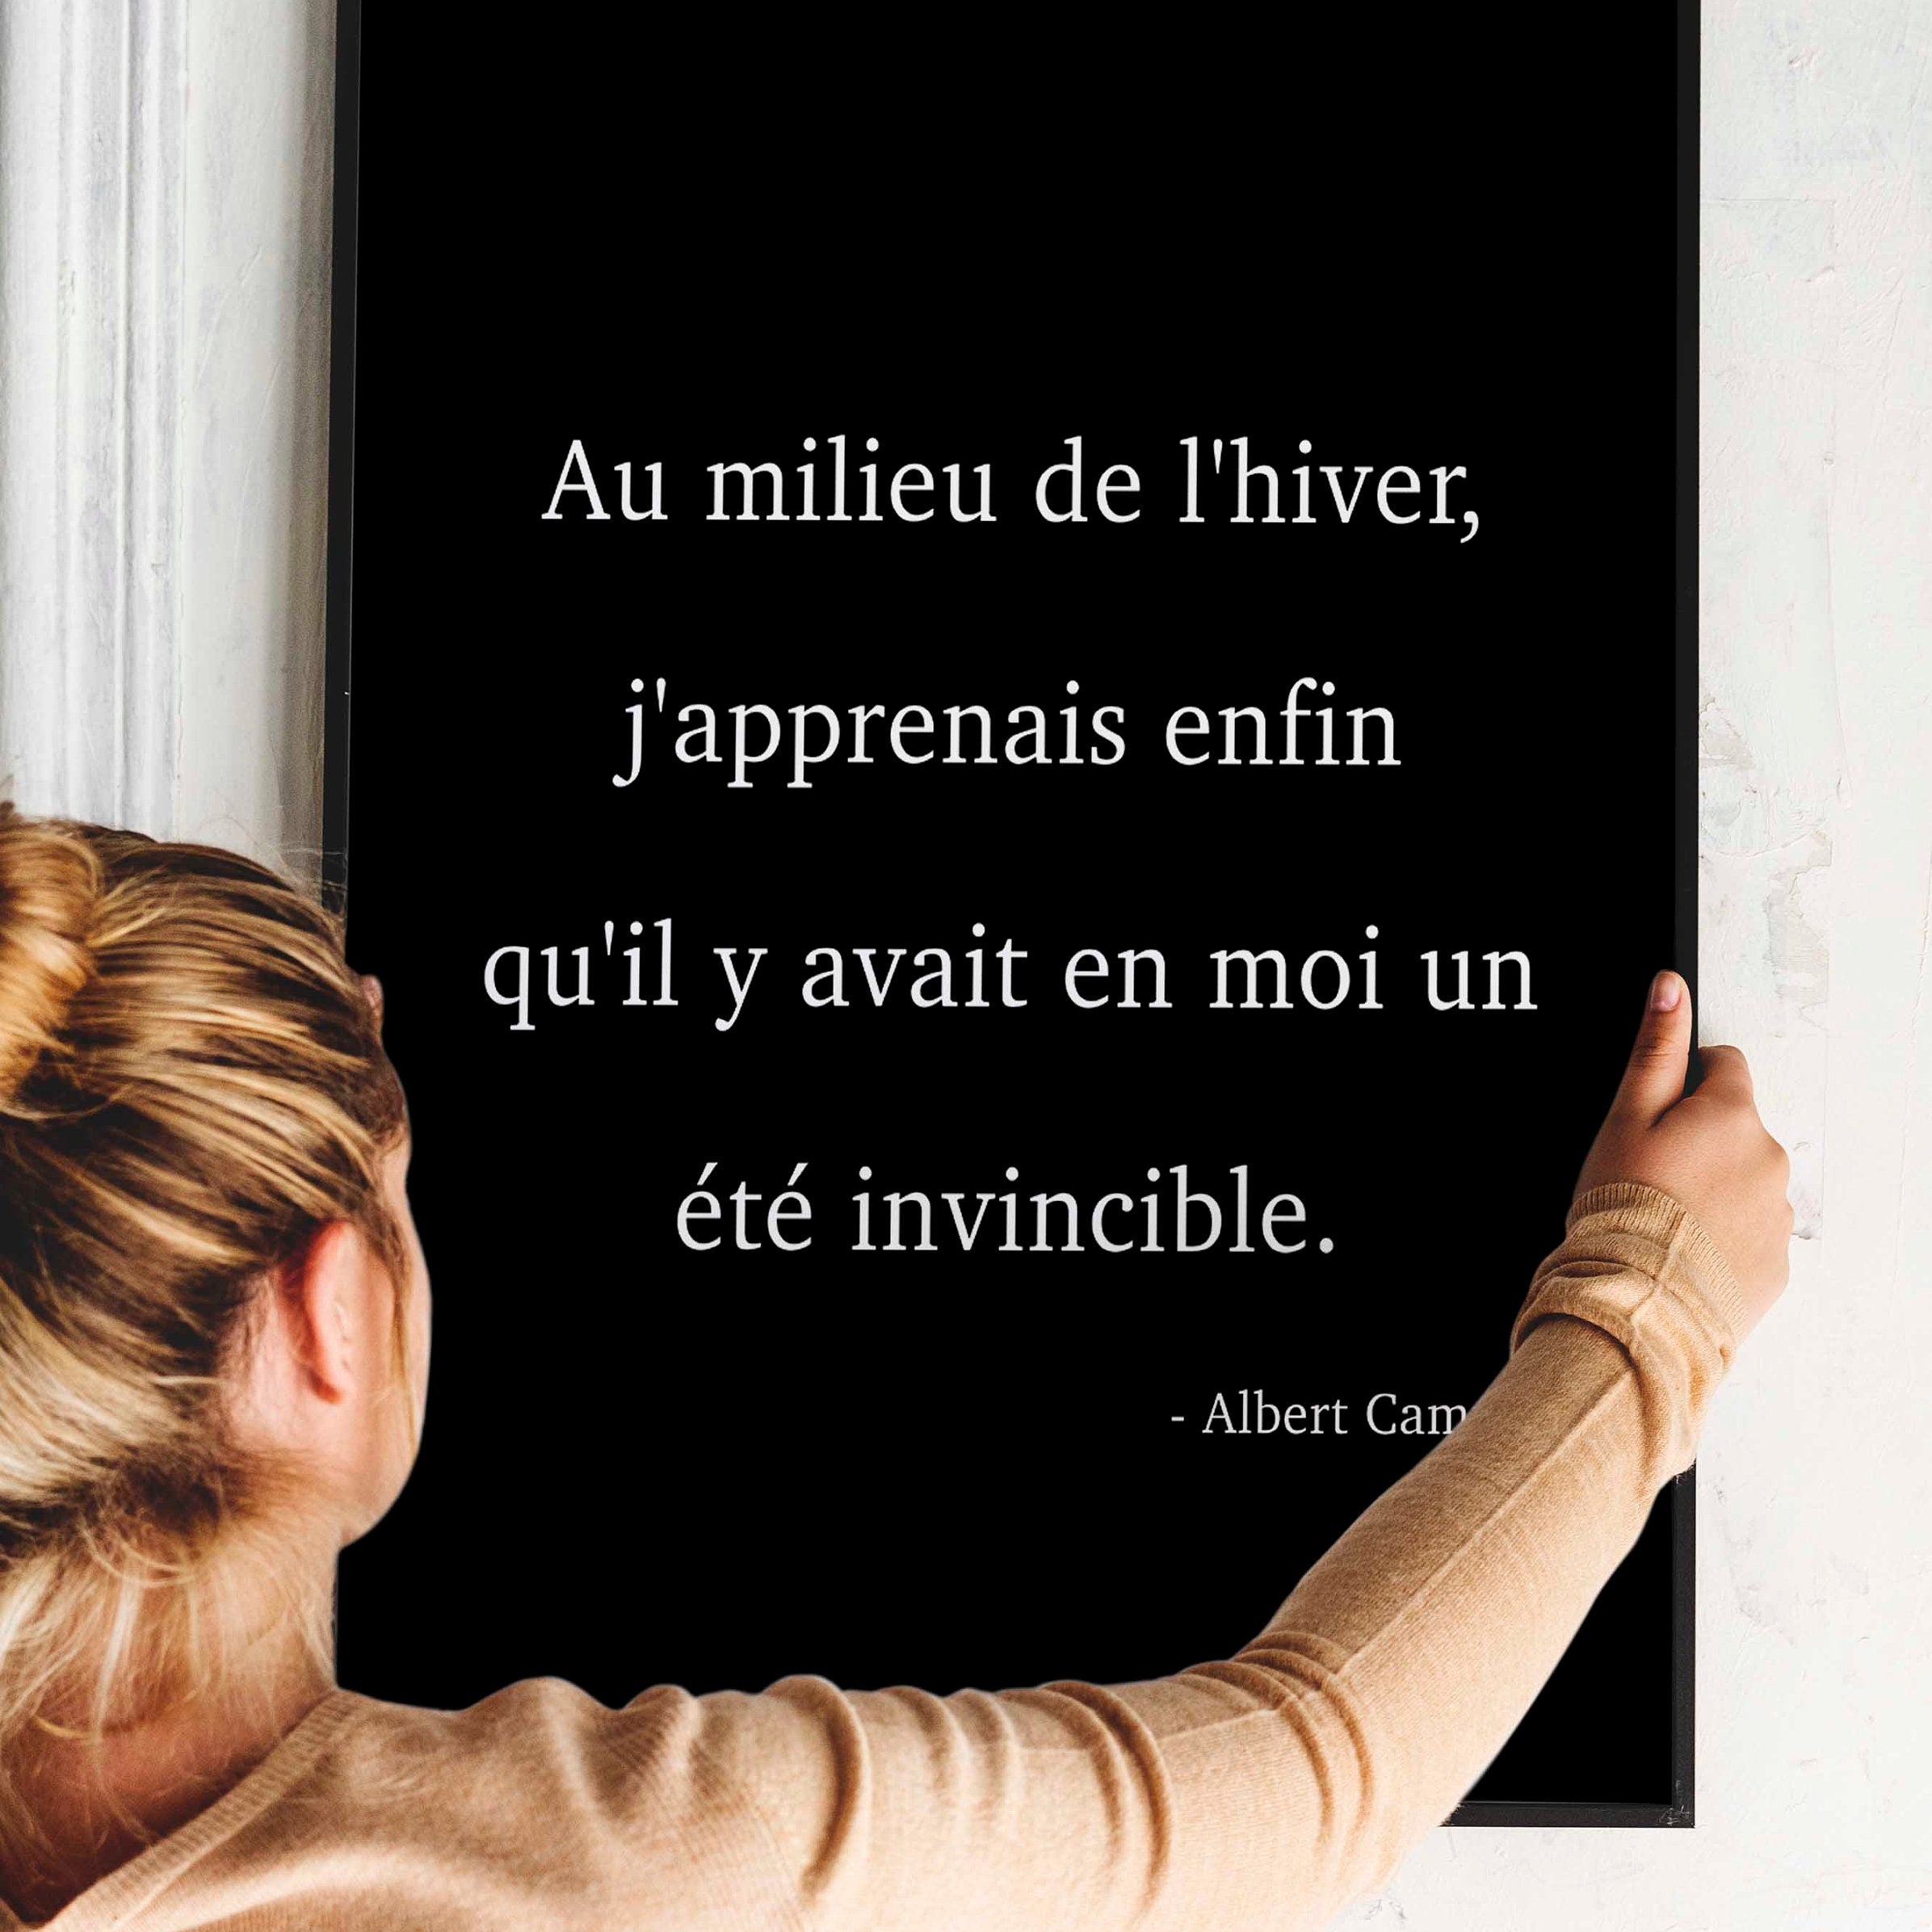 Albert Camus Quote Print in French - un été invincible, Invincible Summer wall art print